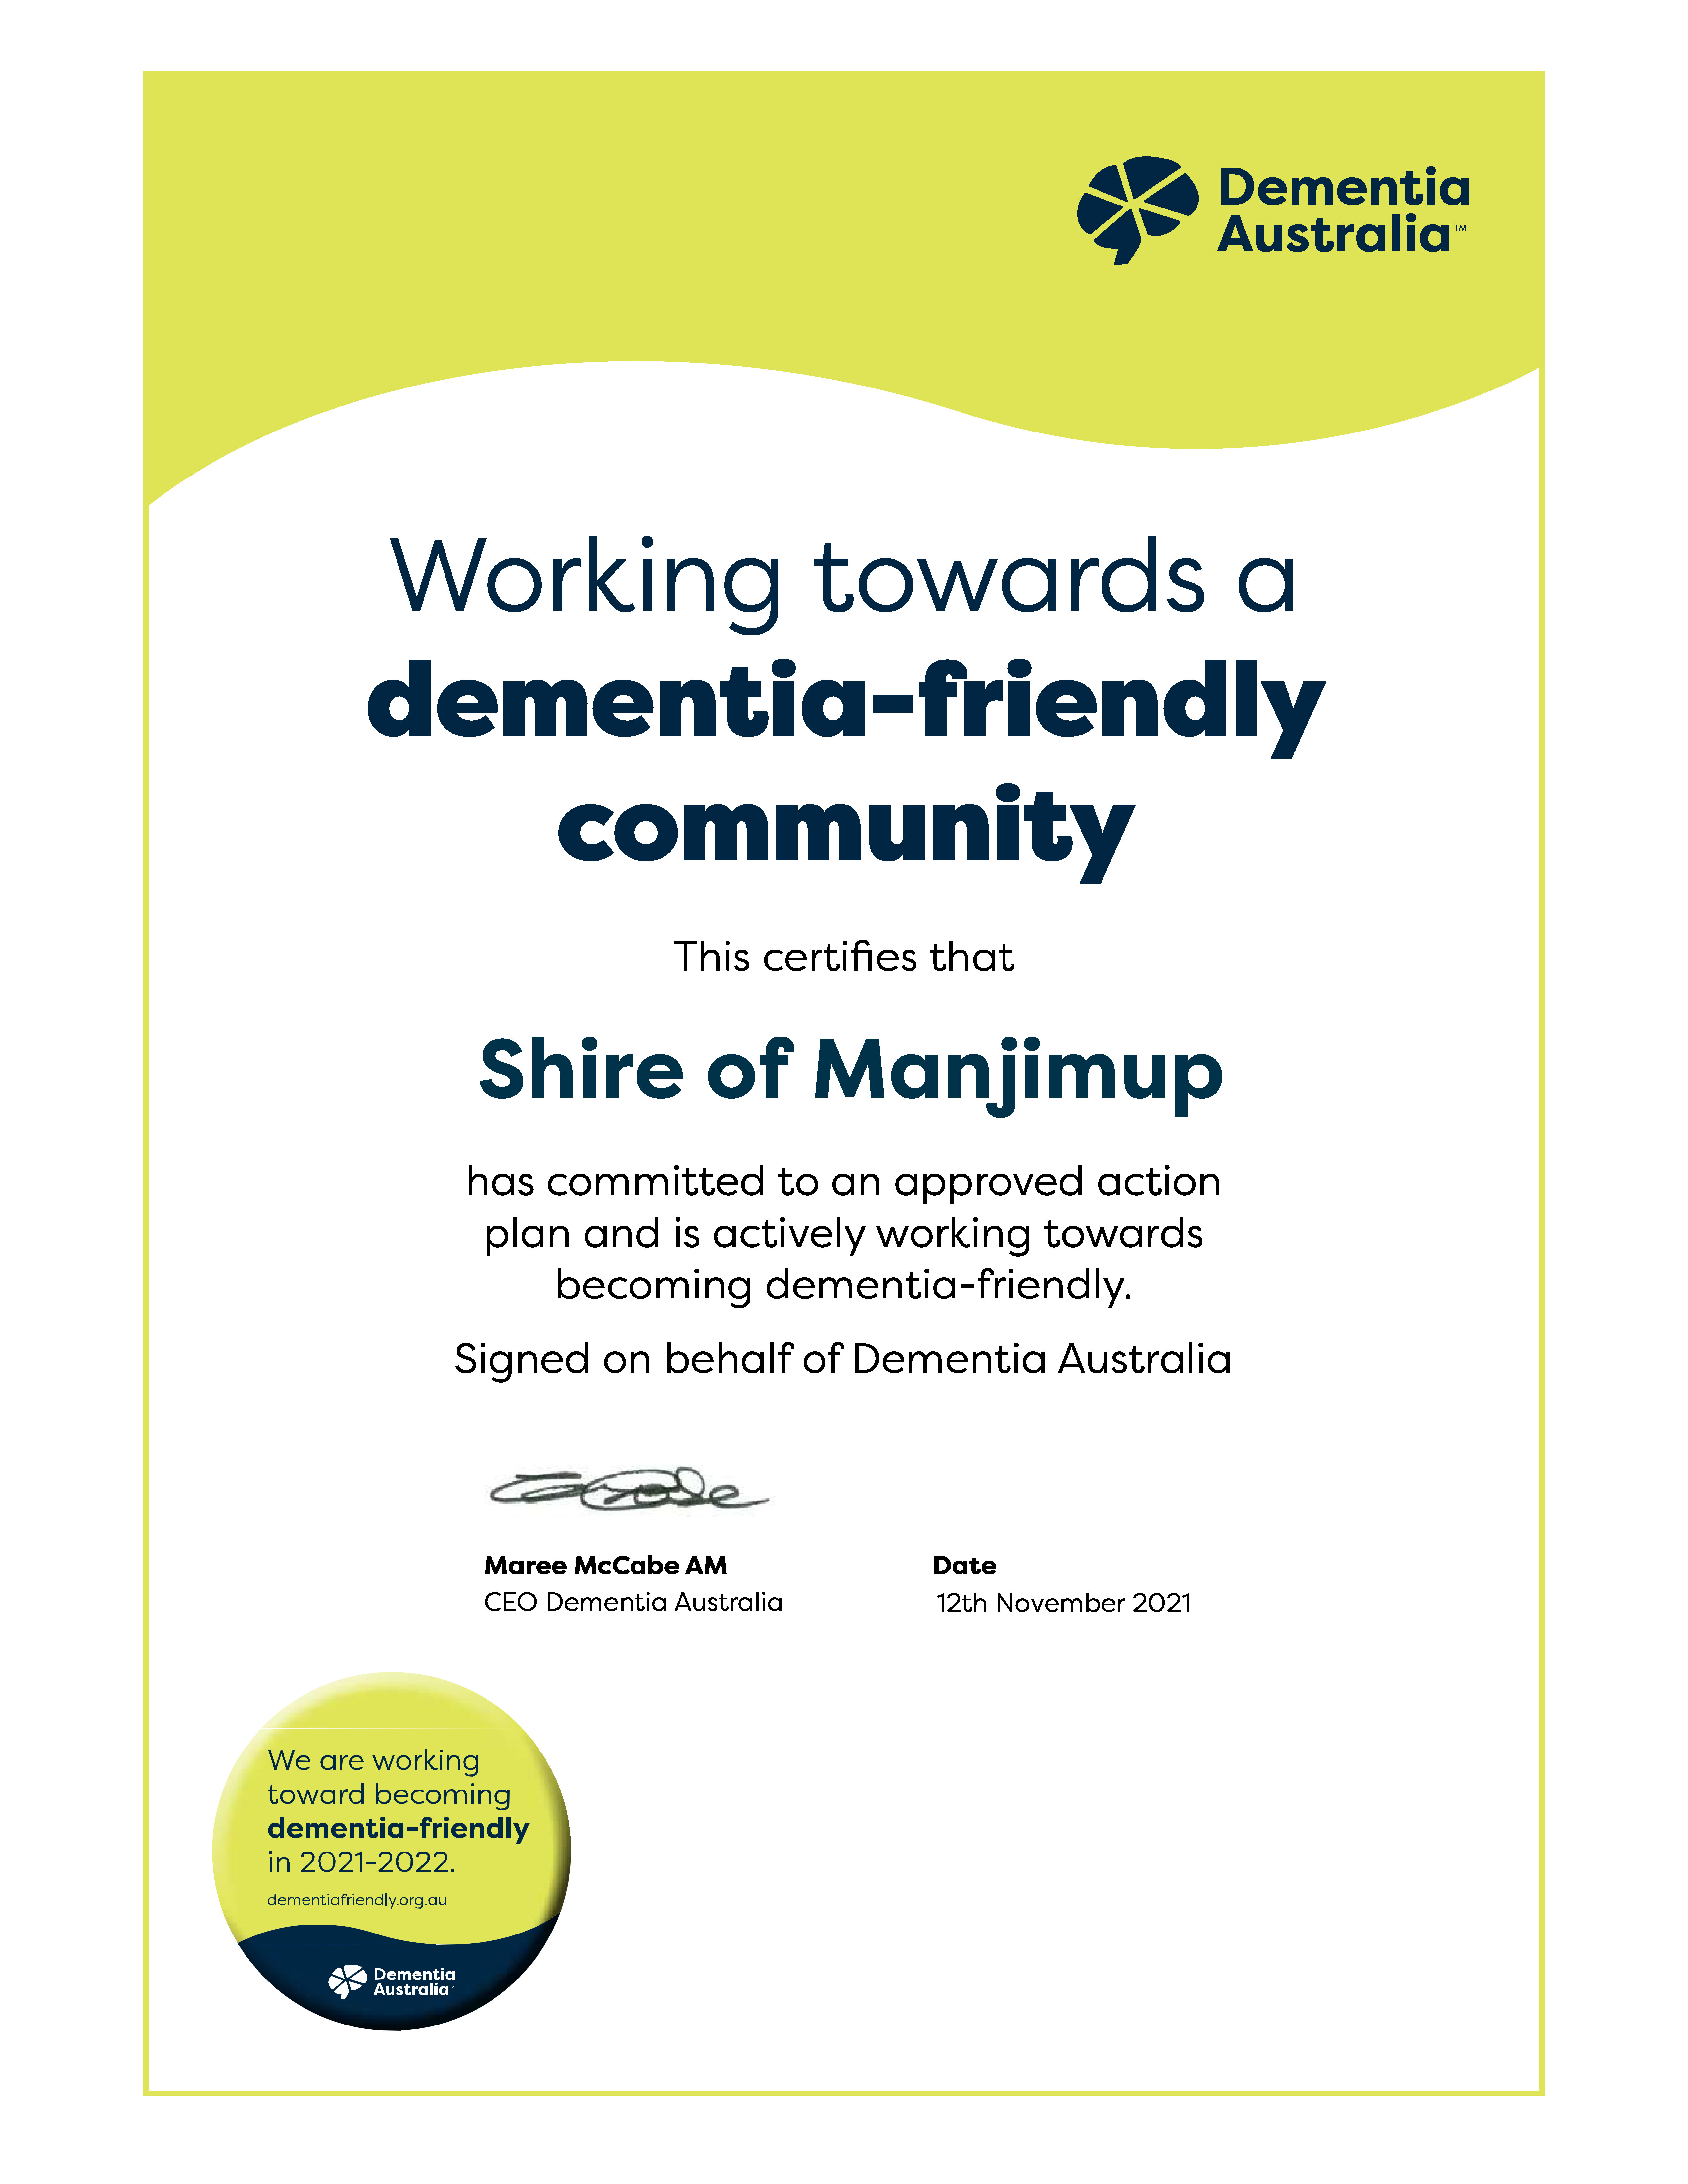 Working towards a dementia friendly community certificate